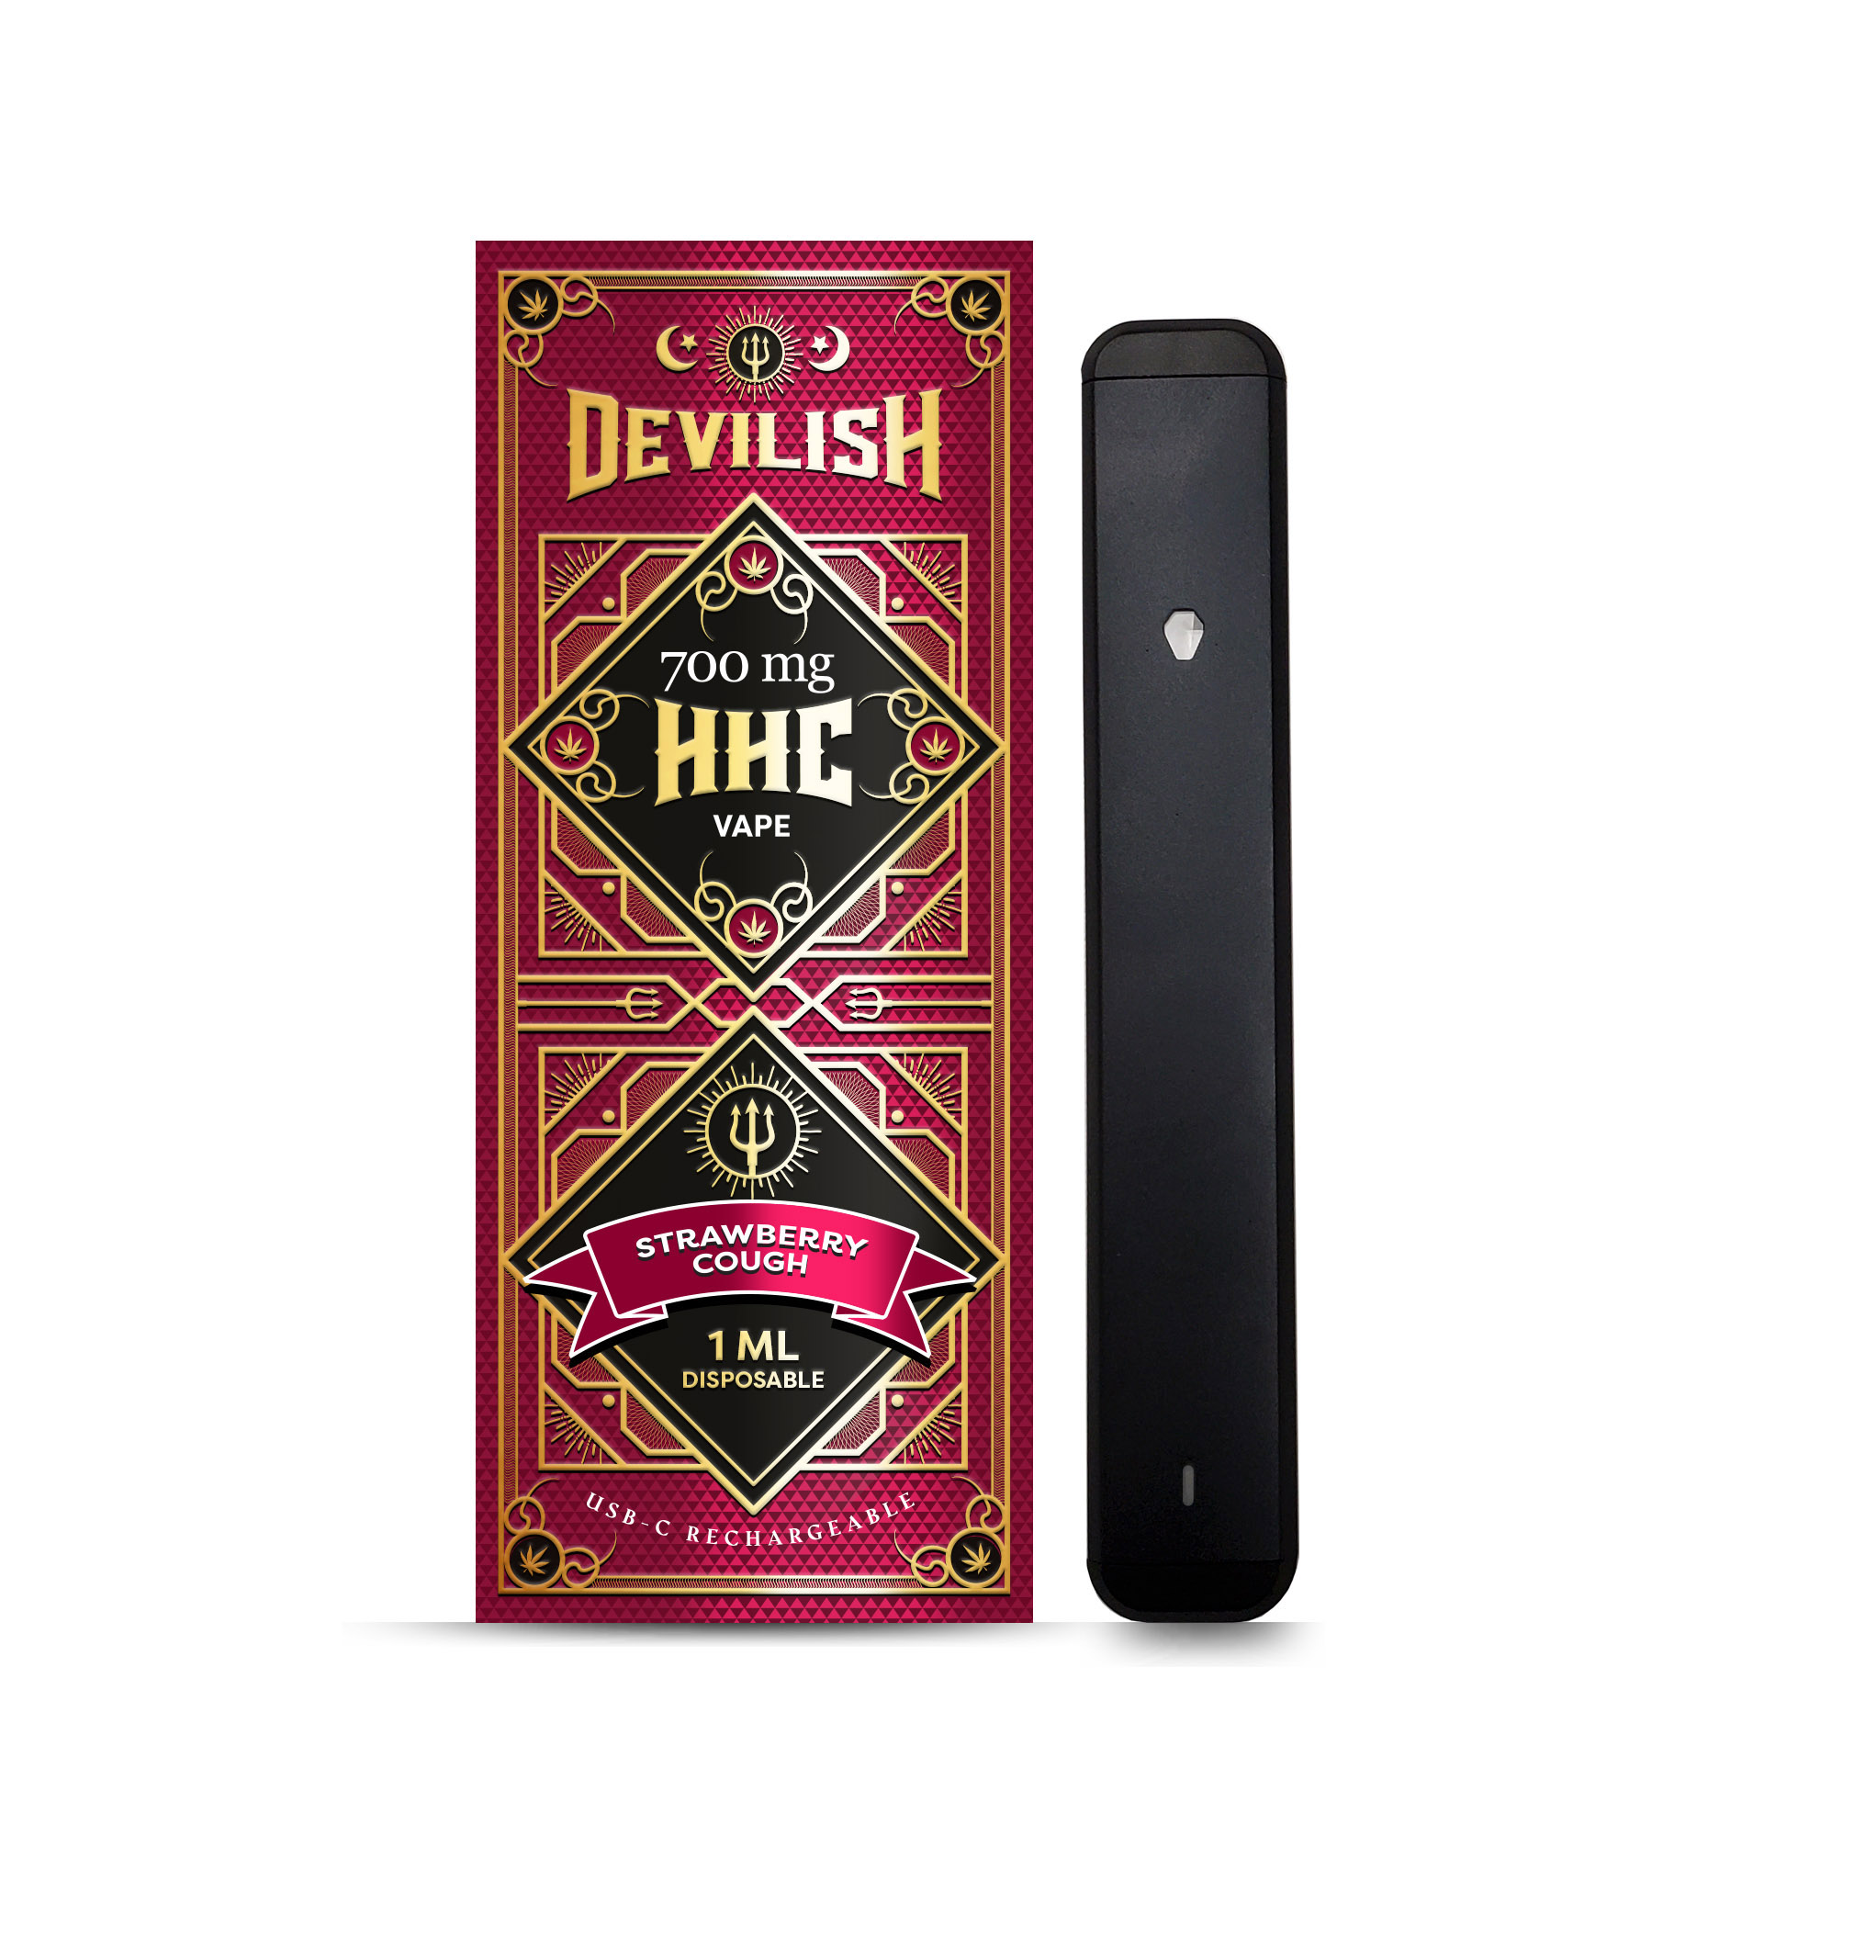 Devilish-700mg-HHC-Strawberry-Cough